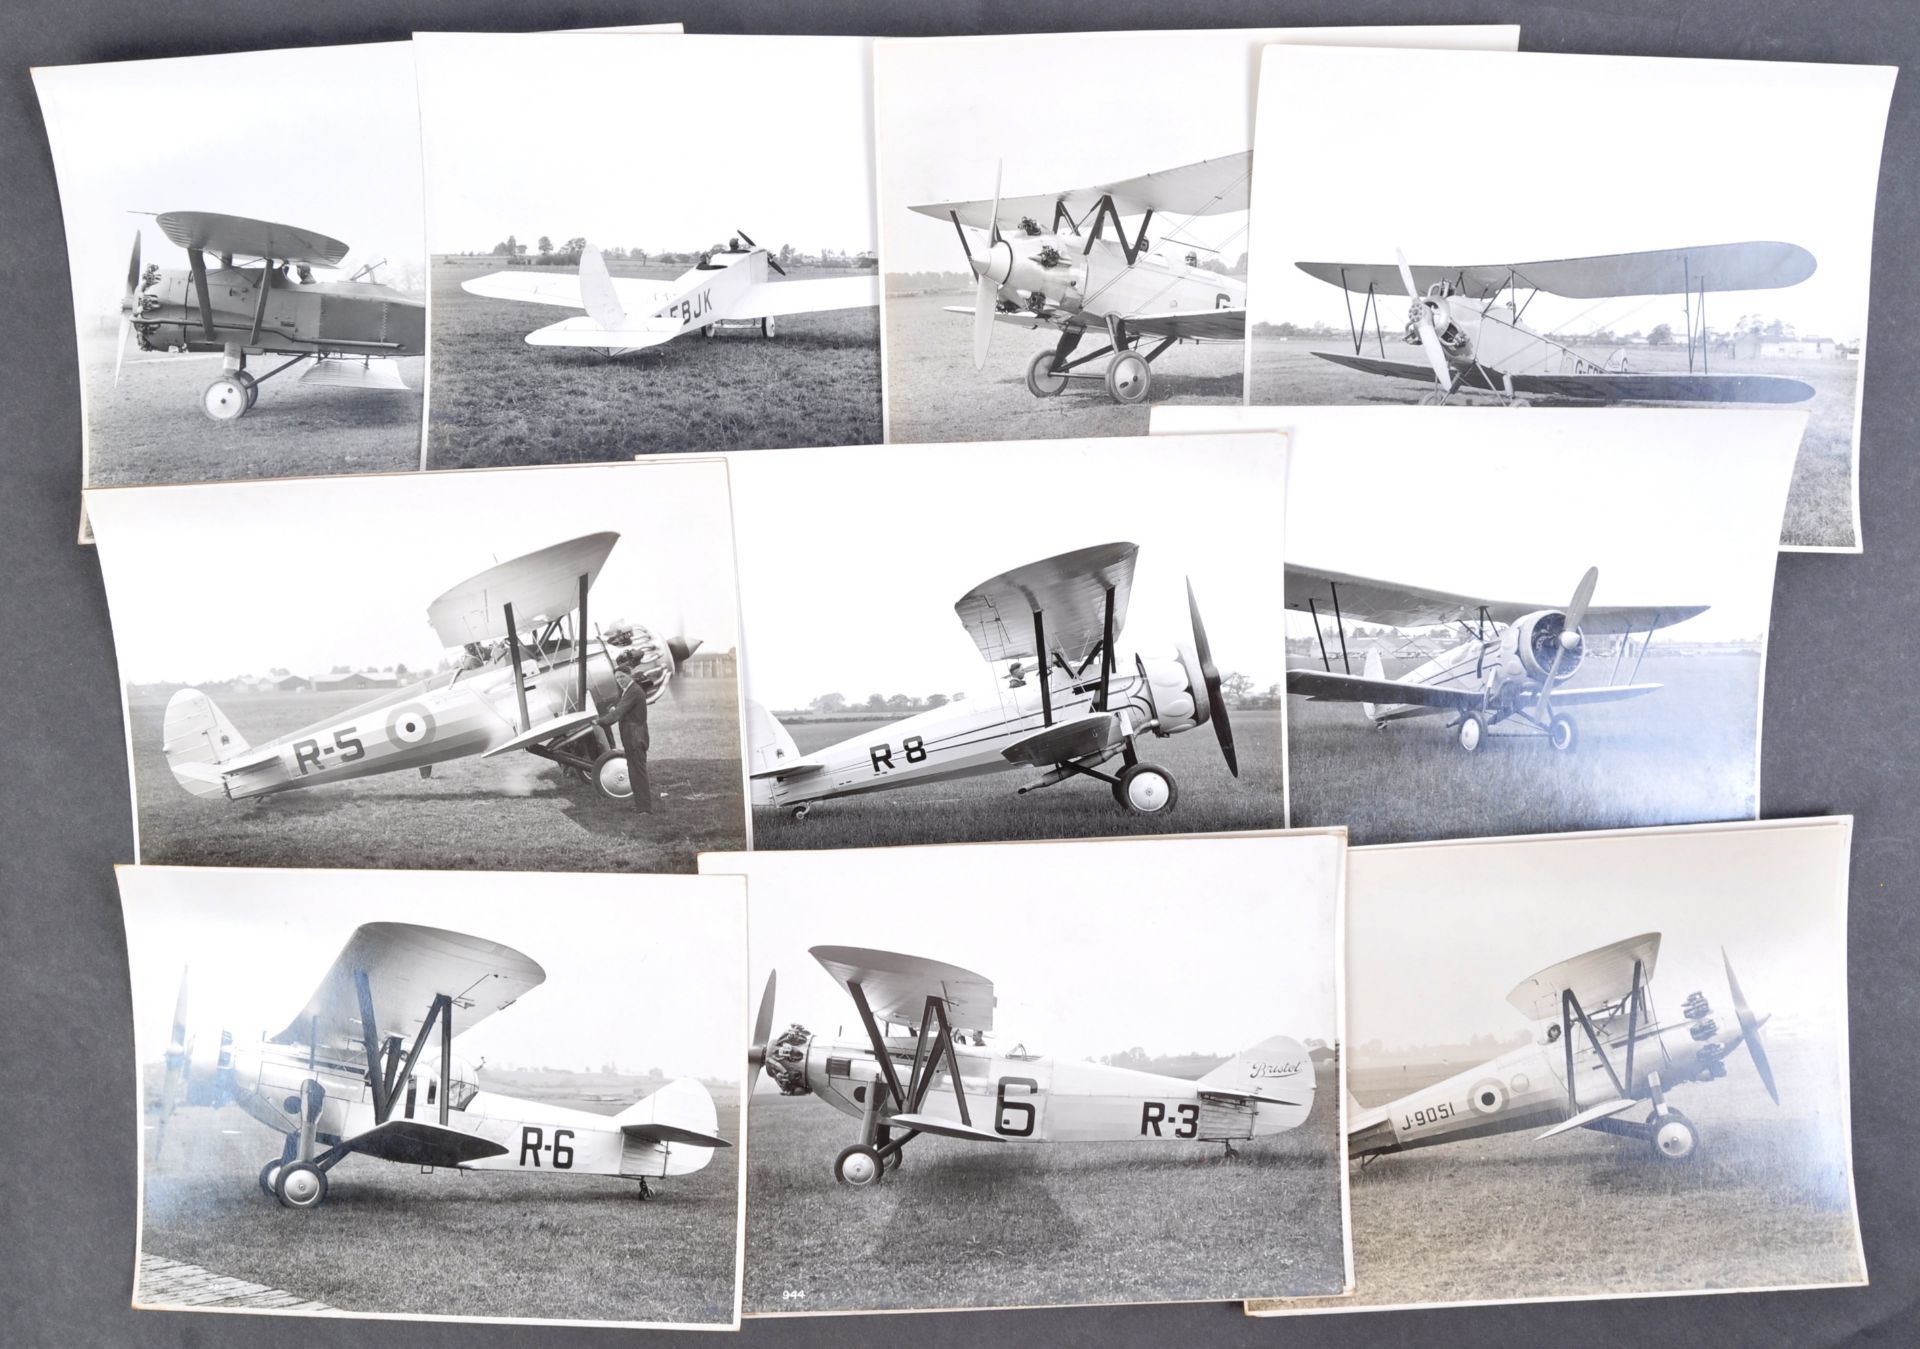 BRISTOL AEROPLANE COMPANY - ORIGINAL PRESS PHOTOS OF AIRCRAFT - Image 6 of 9